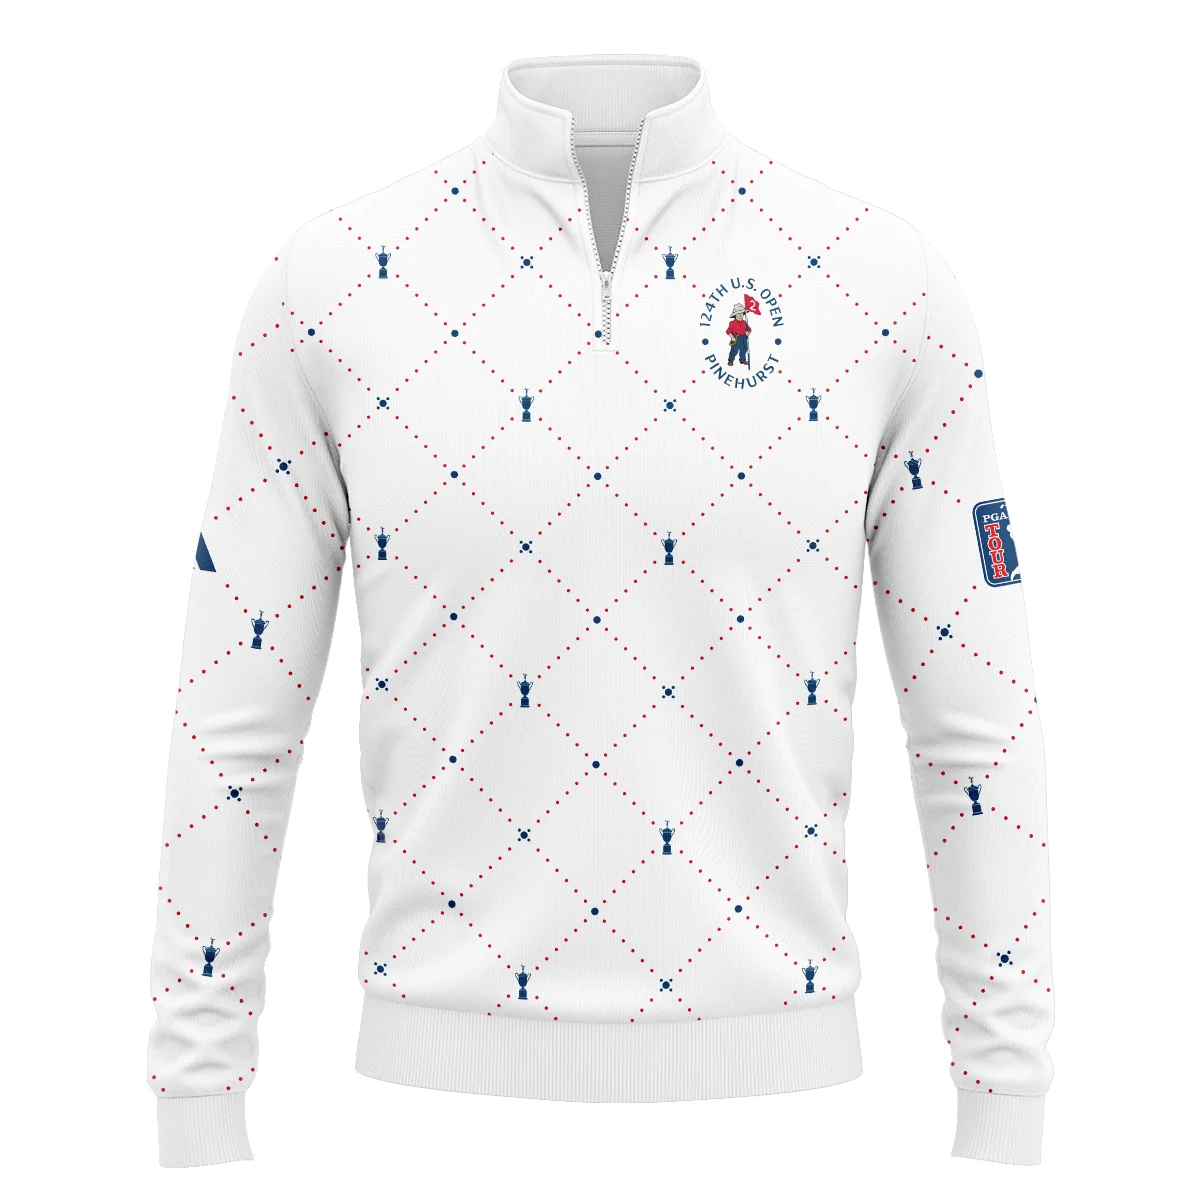 Argyle Pattern With Cup 124th U.S. Open Pinehurst Adidas Zipper Hoodie Shirt Style Classic Zipper Hoodie Shirt